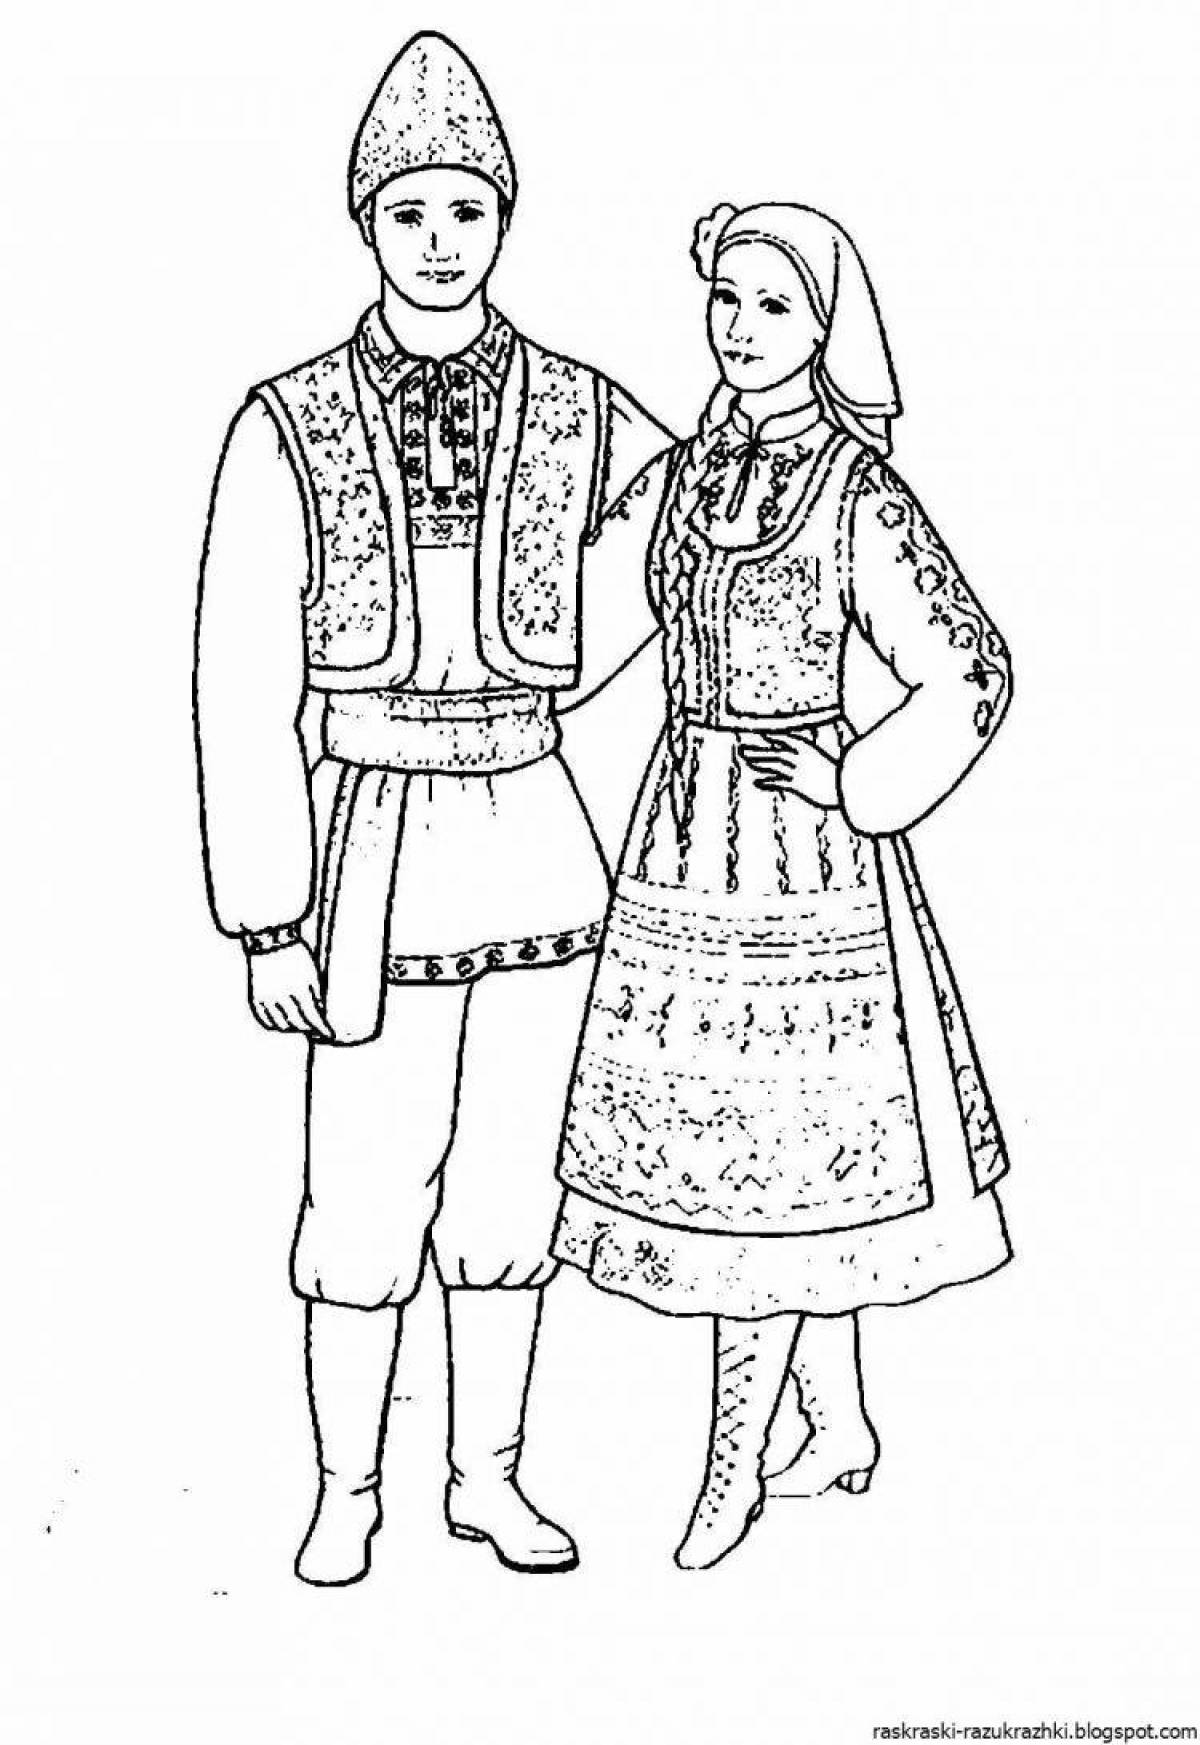 Detailed Bashkir national costume